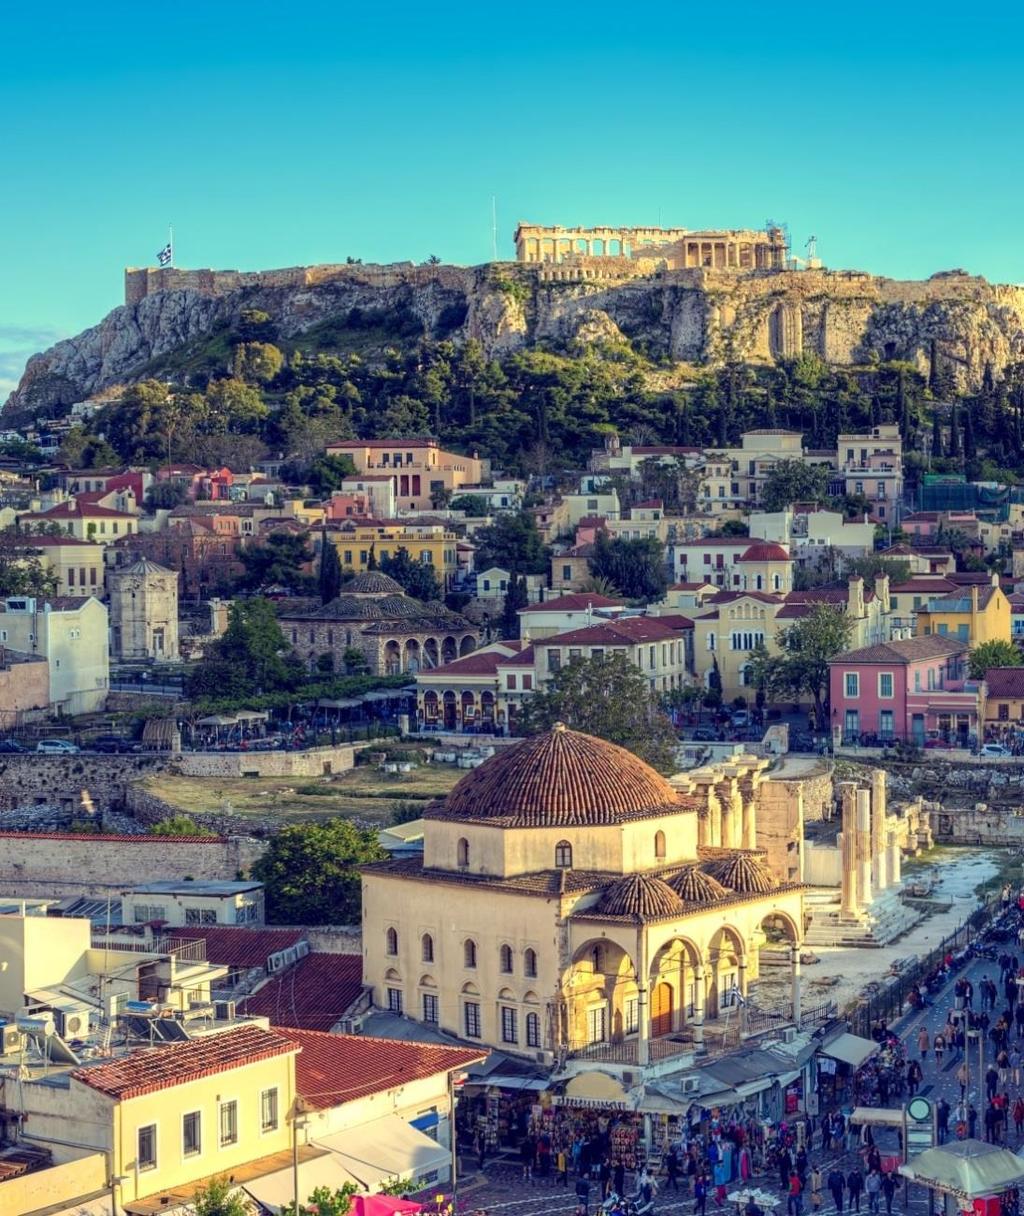 CITY BREAK 4 5 6 Στρατηγικός στόχος η τοποθέτηση της Αθήνας και της Θεσσαλονίκης ως δημοφιλών προορισμών City Break, με αύξηση του αριθμού των επισκεπτών που επιλέγουν τις πόλεις αυτές ως τελικό